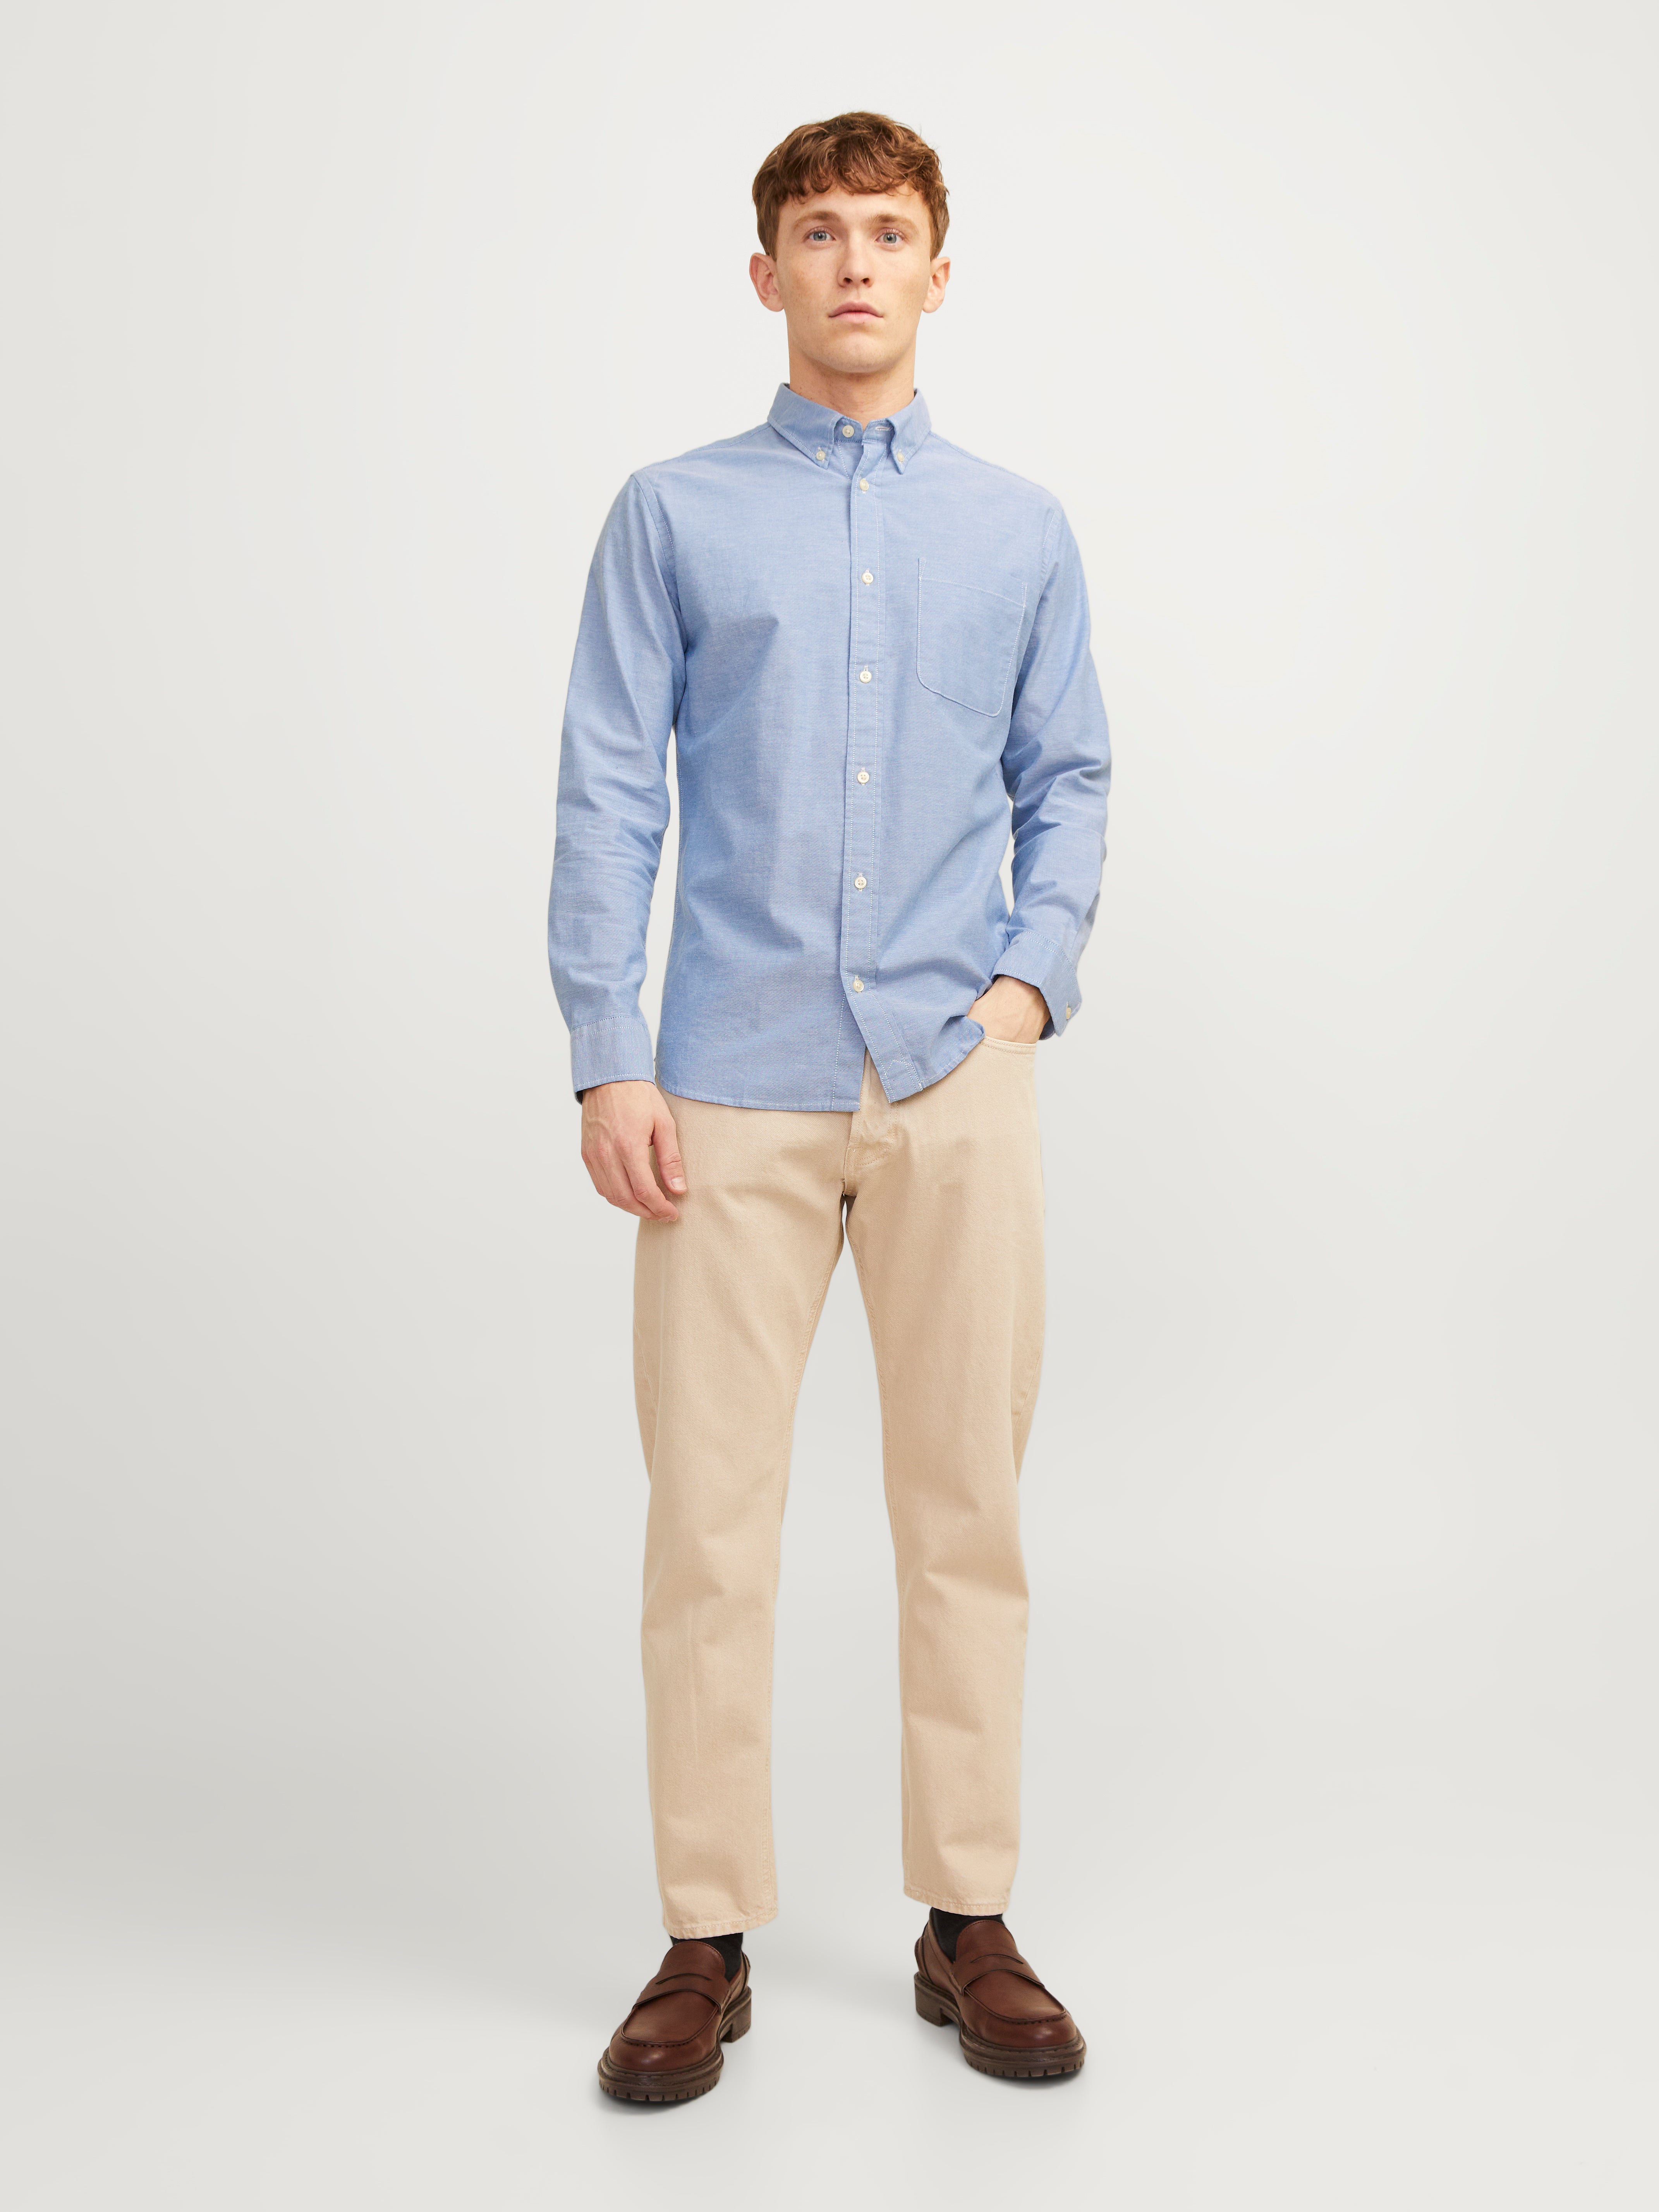 Sky Blue Shirt Matching Pant Combinations | Best Sky Blue Shirt Matching  Pants